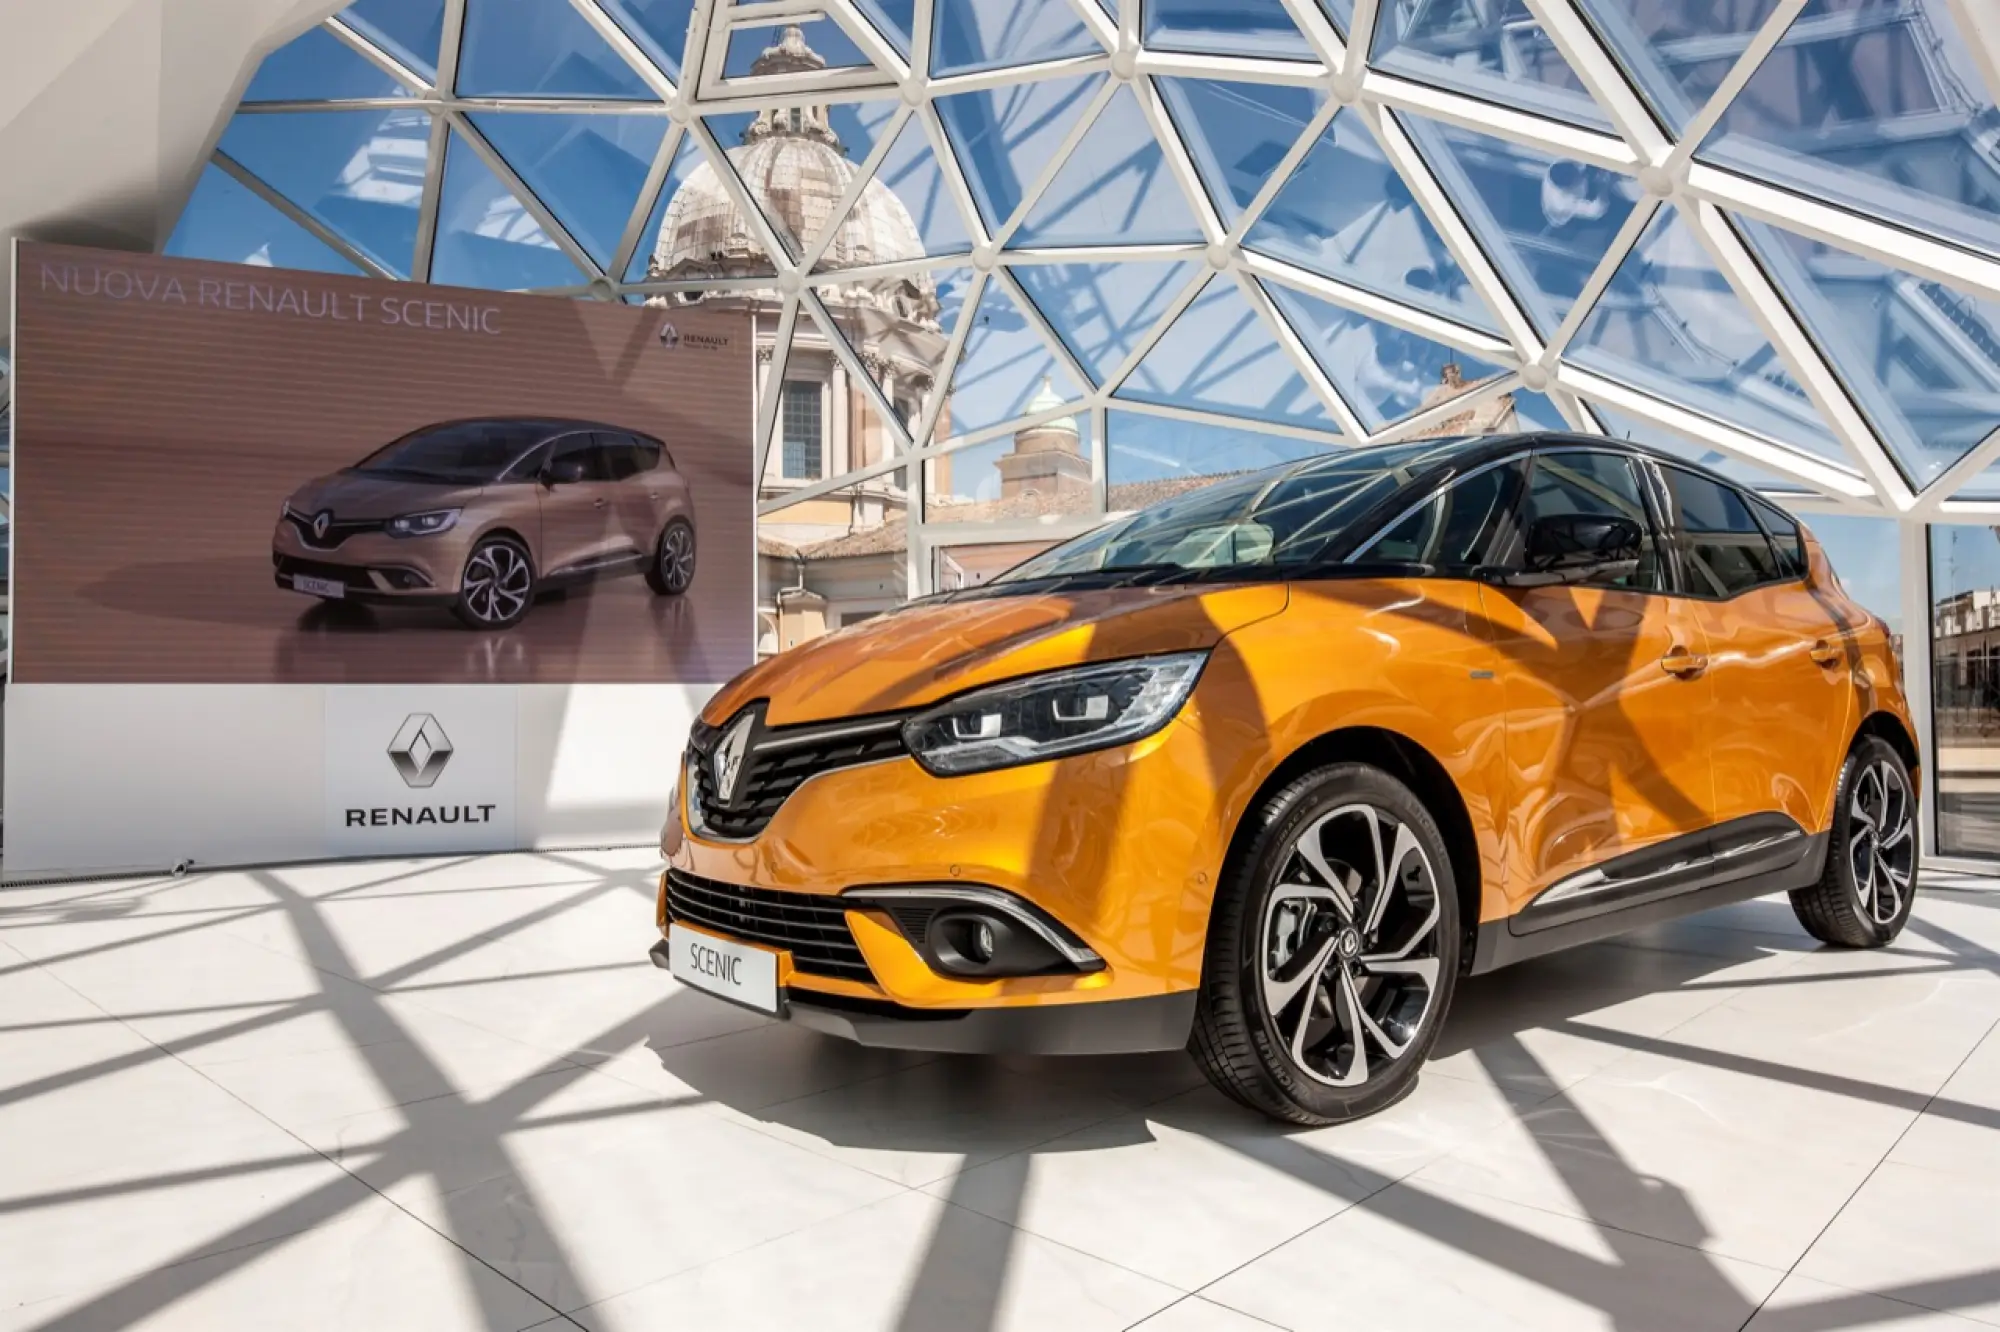 Nuova Renault Scenic - 2016 - 5